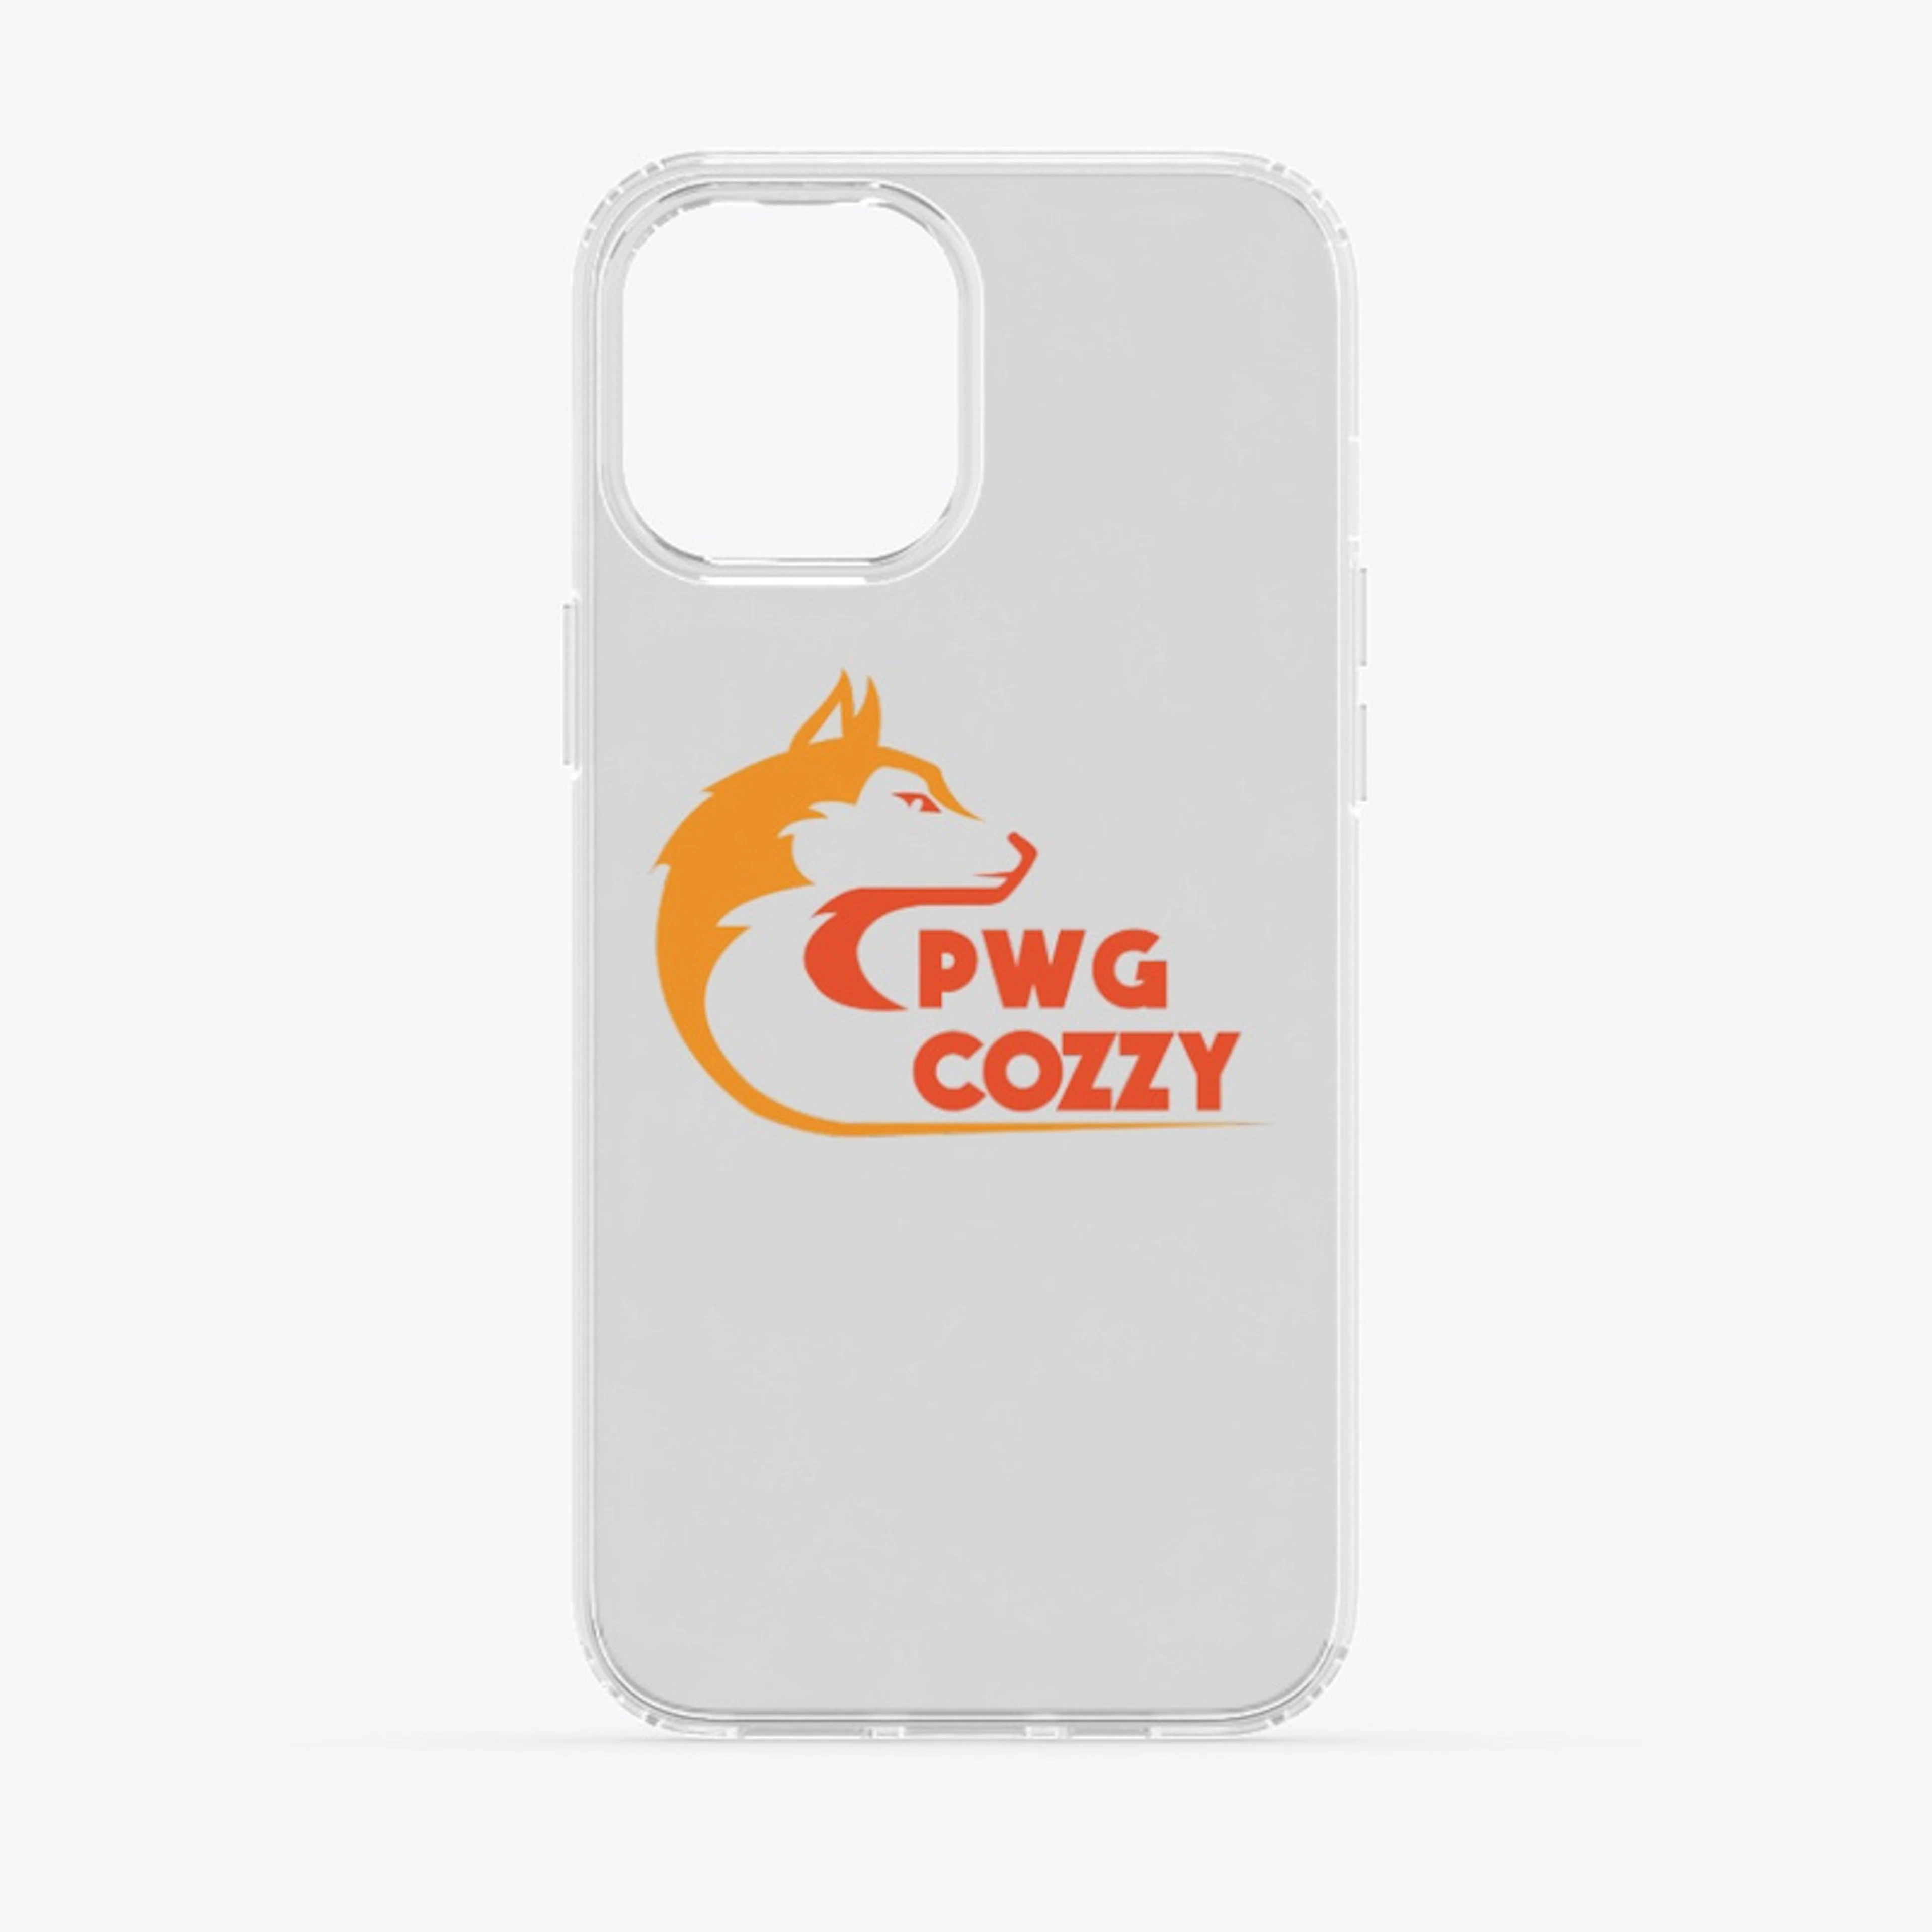 PWG Cozzy Logo iphone case